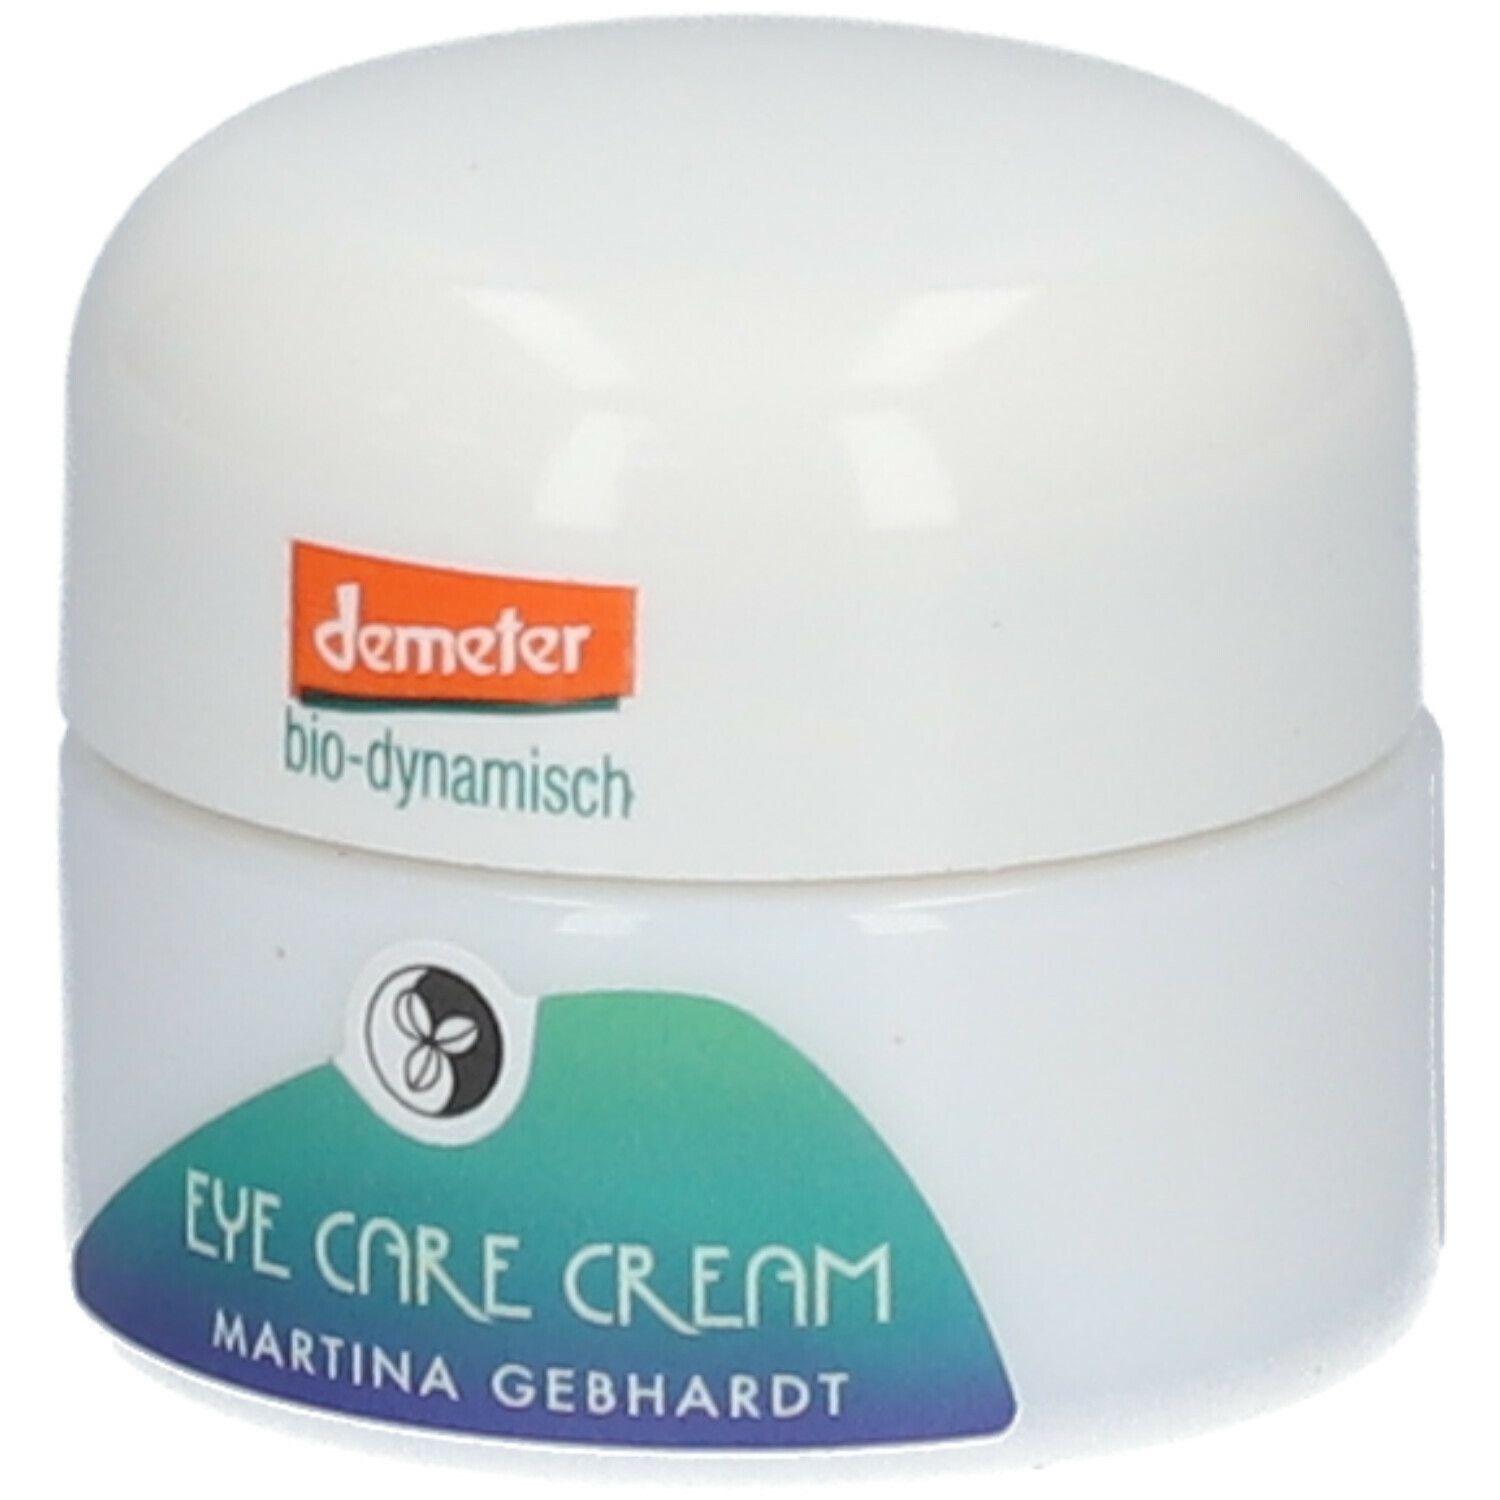 Martina Gebhardt Naturkosmetik Eye Care Cream